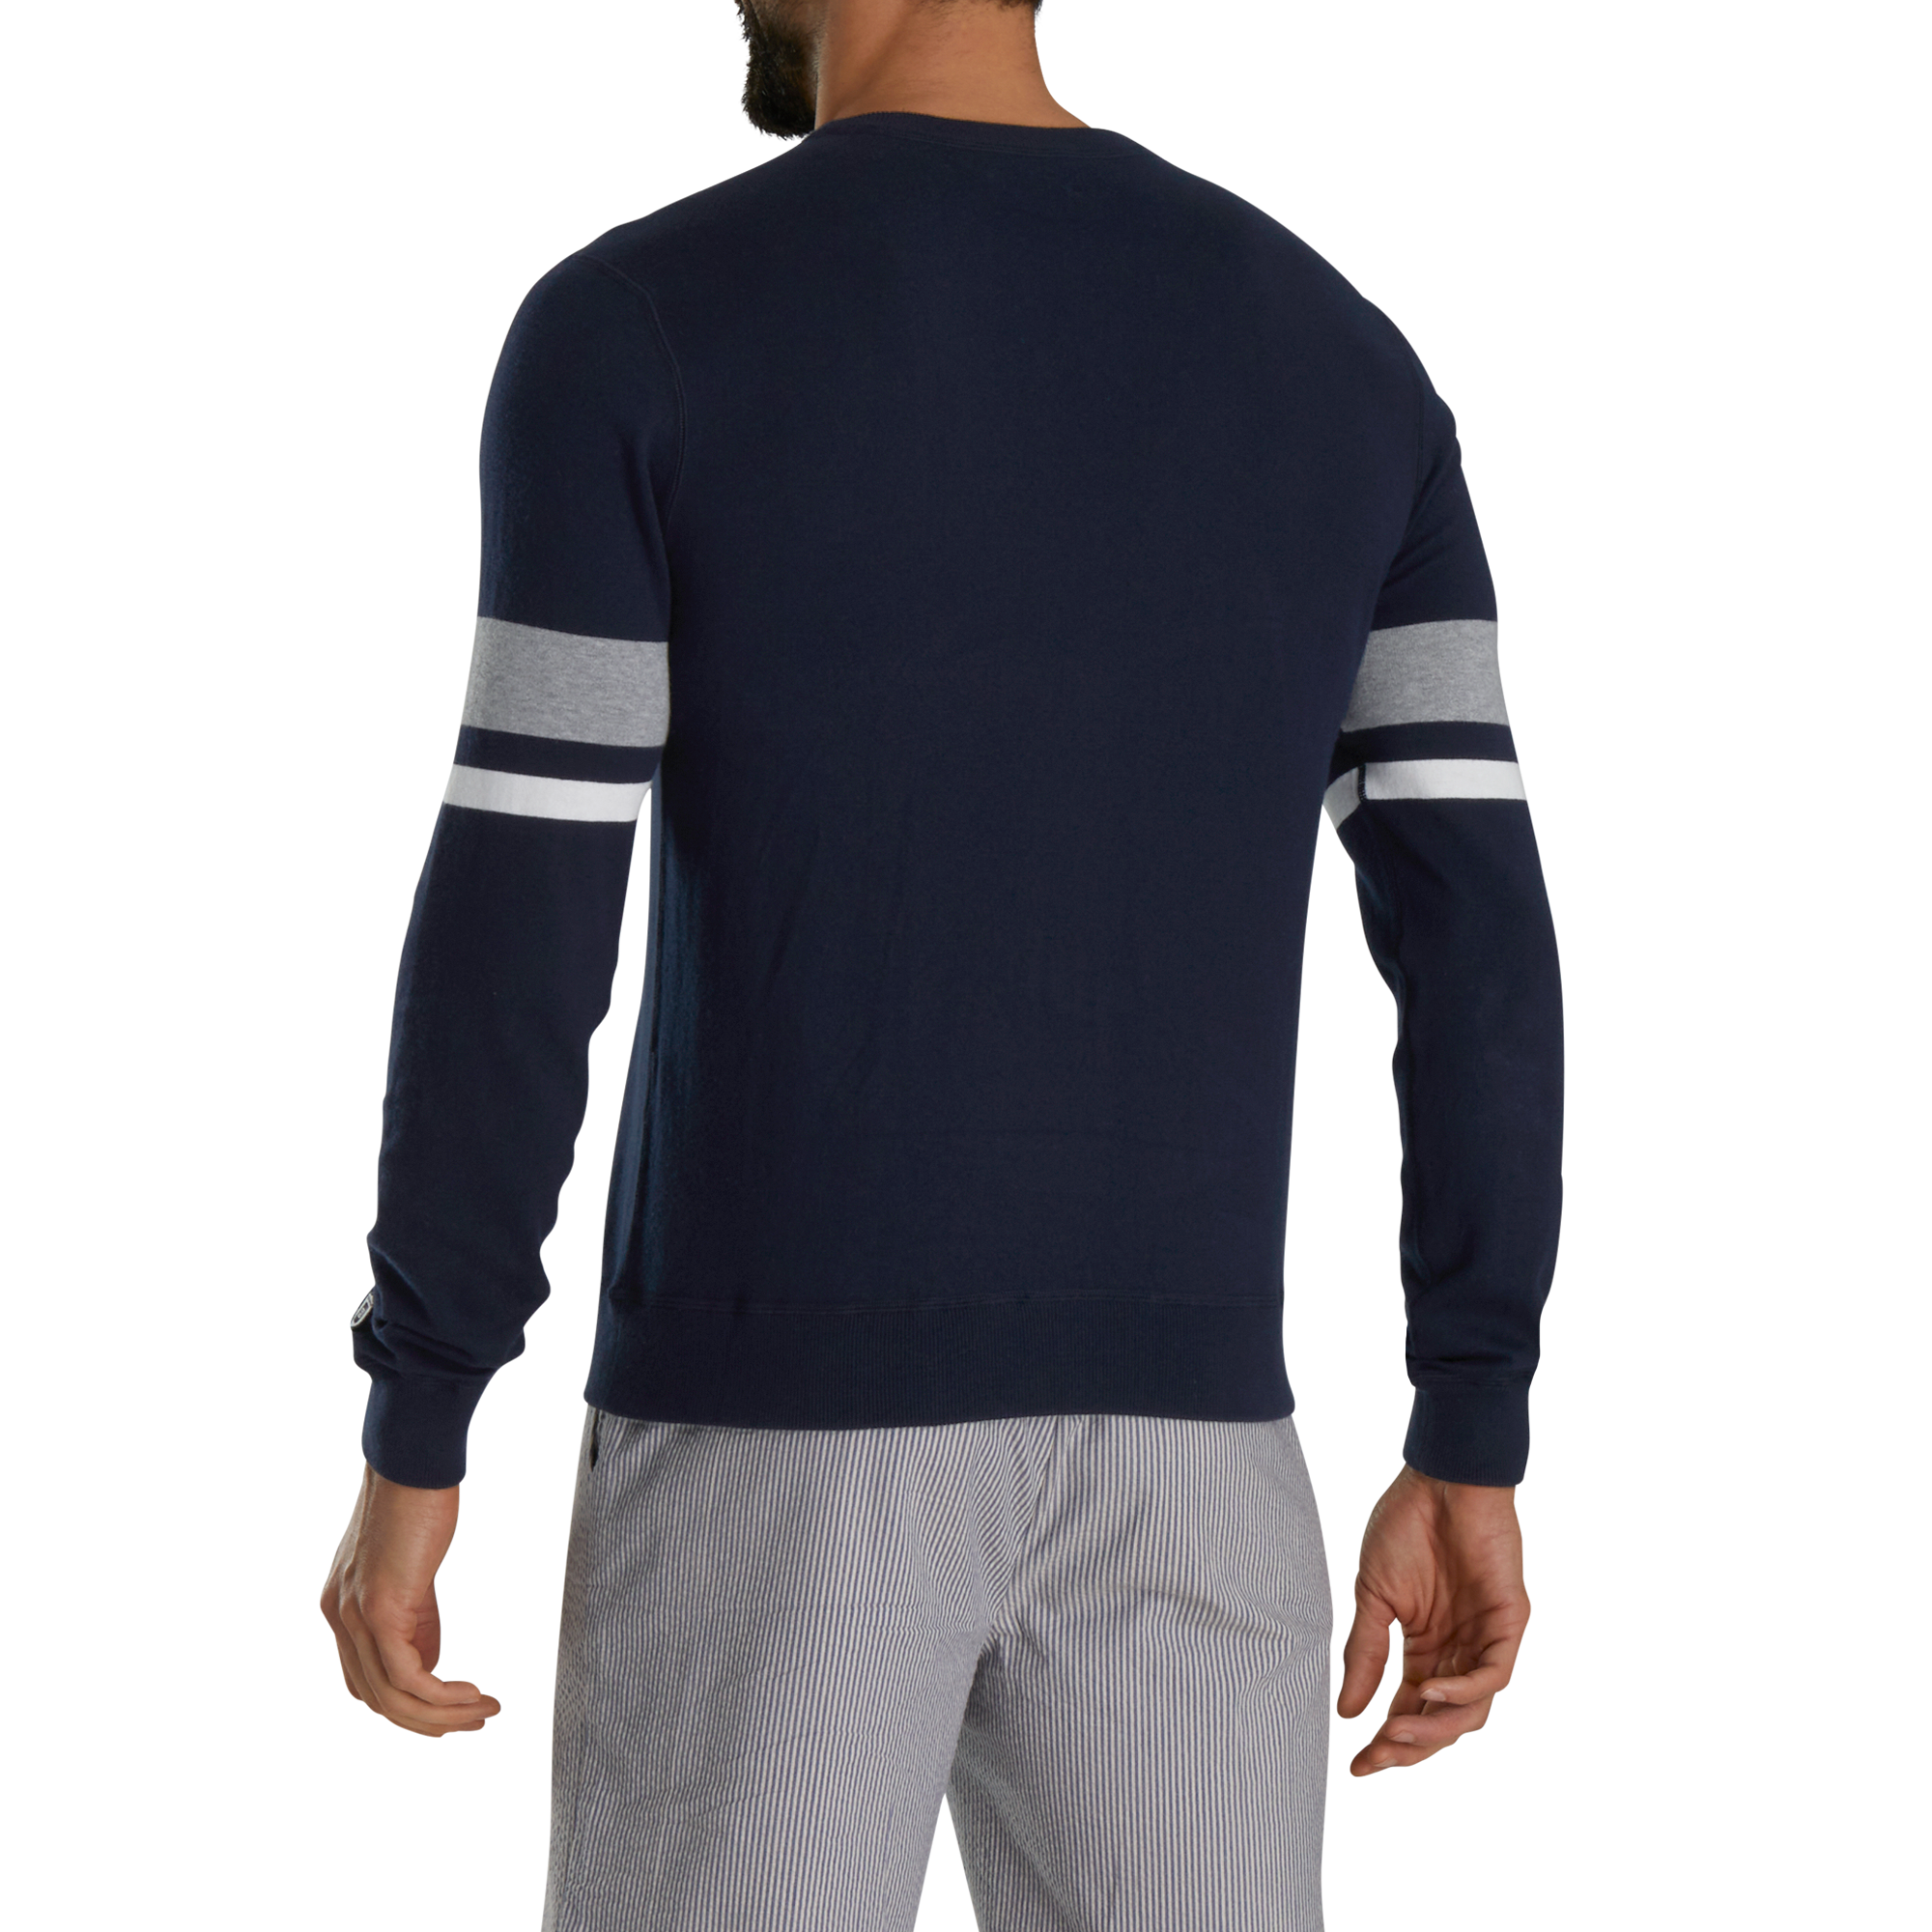 FJ x Todd Snyder Sleeve Stripe Sweater